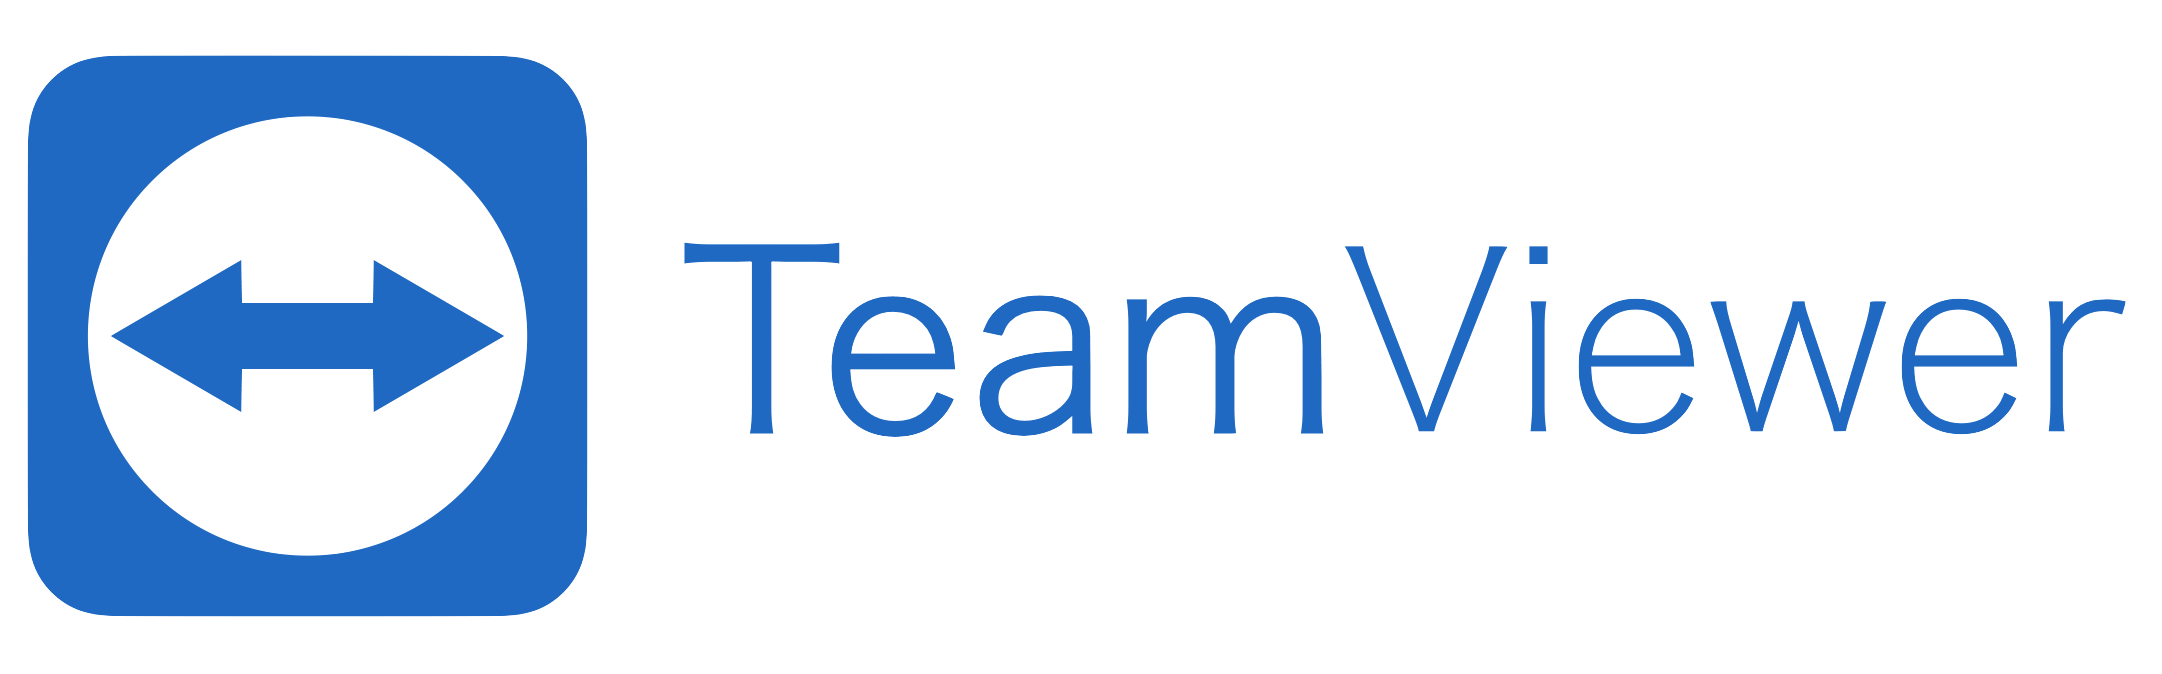 TeamViewer introduces Patch Management - TECHPHLIE